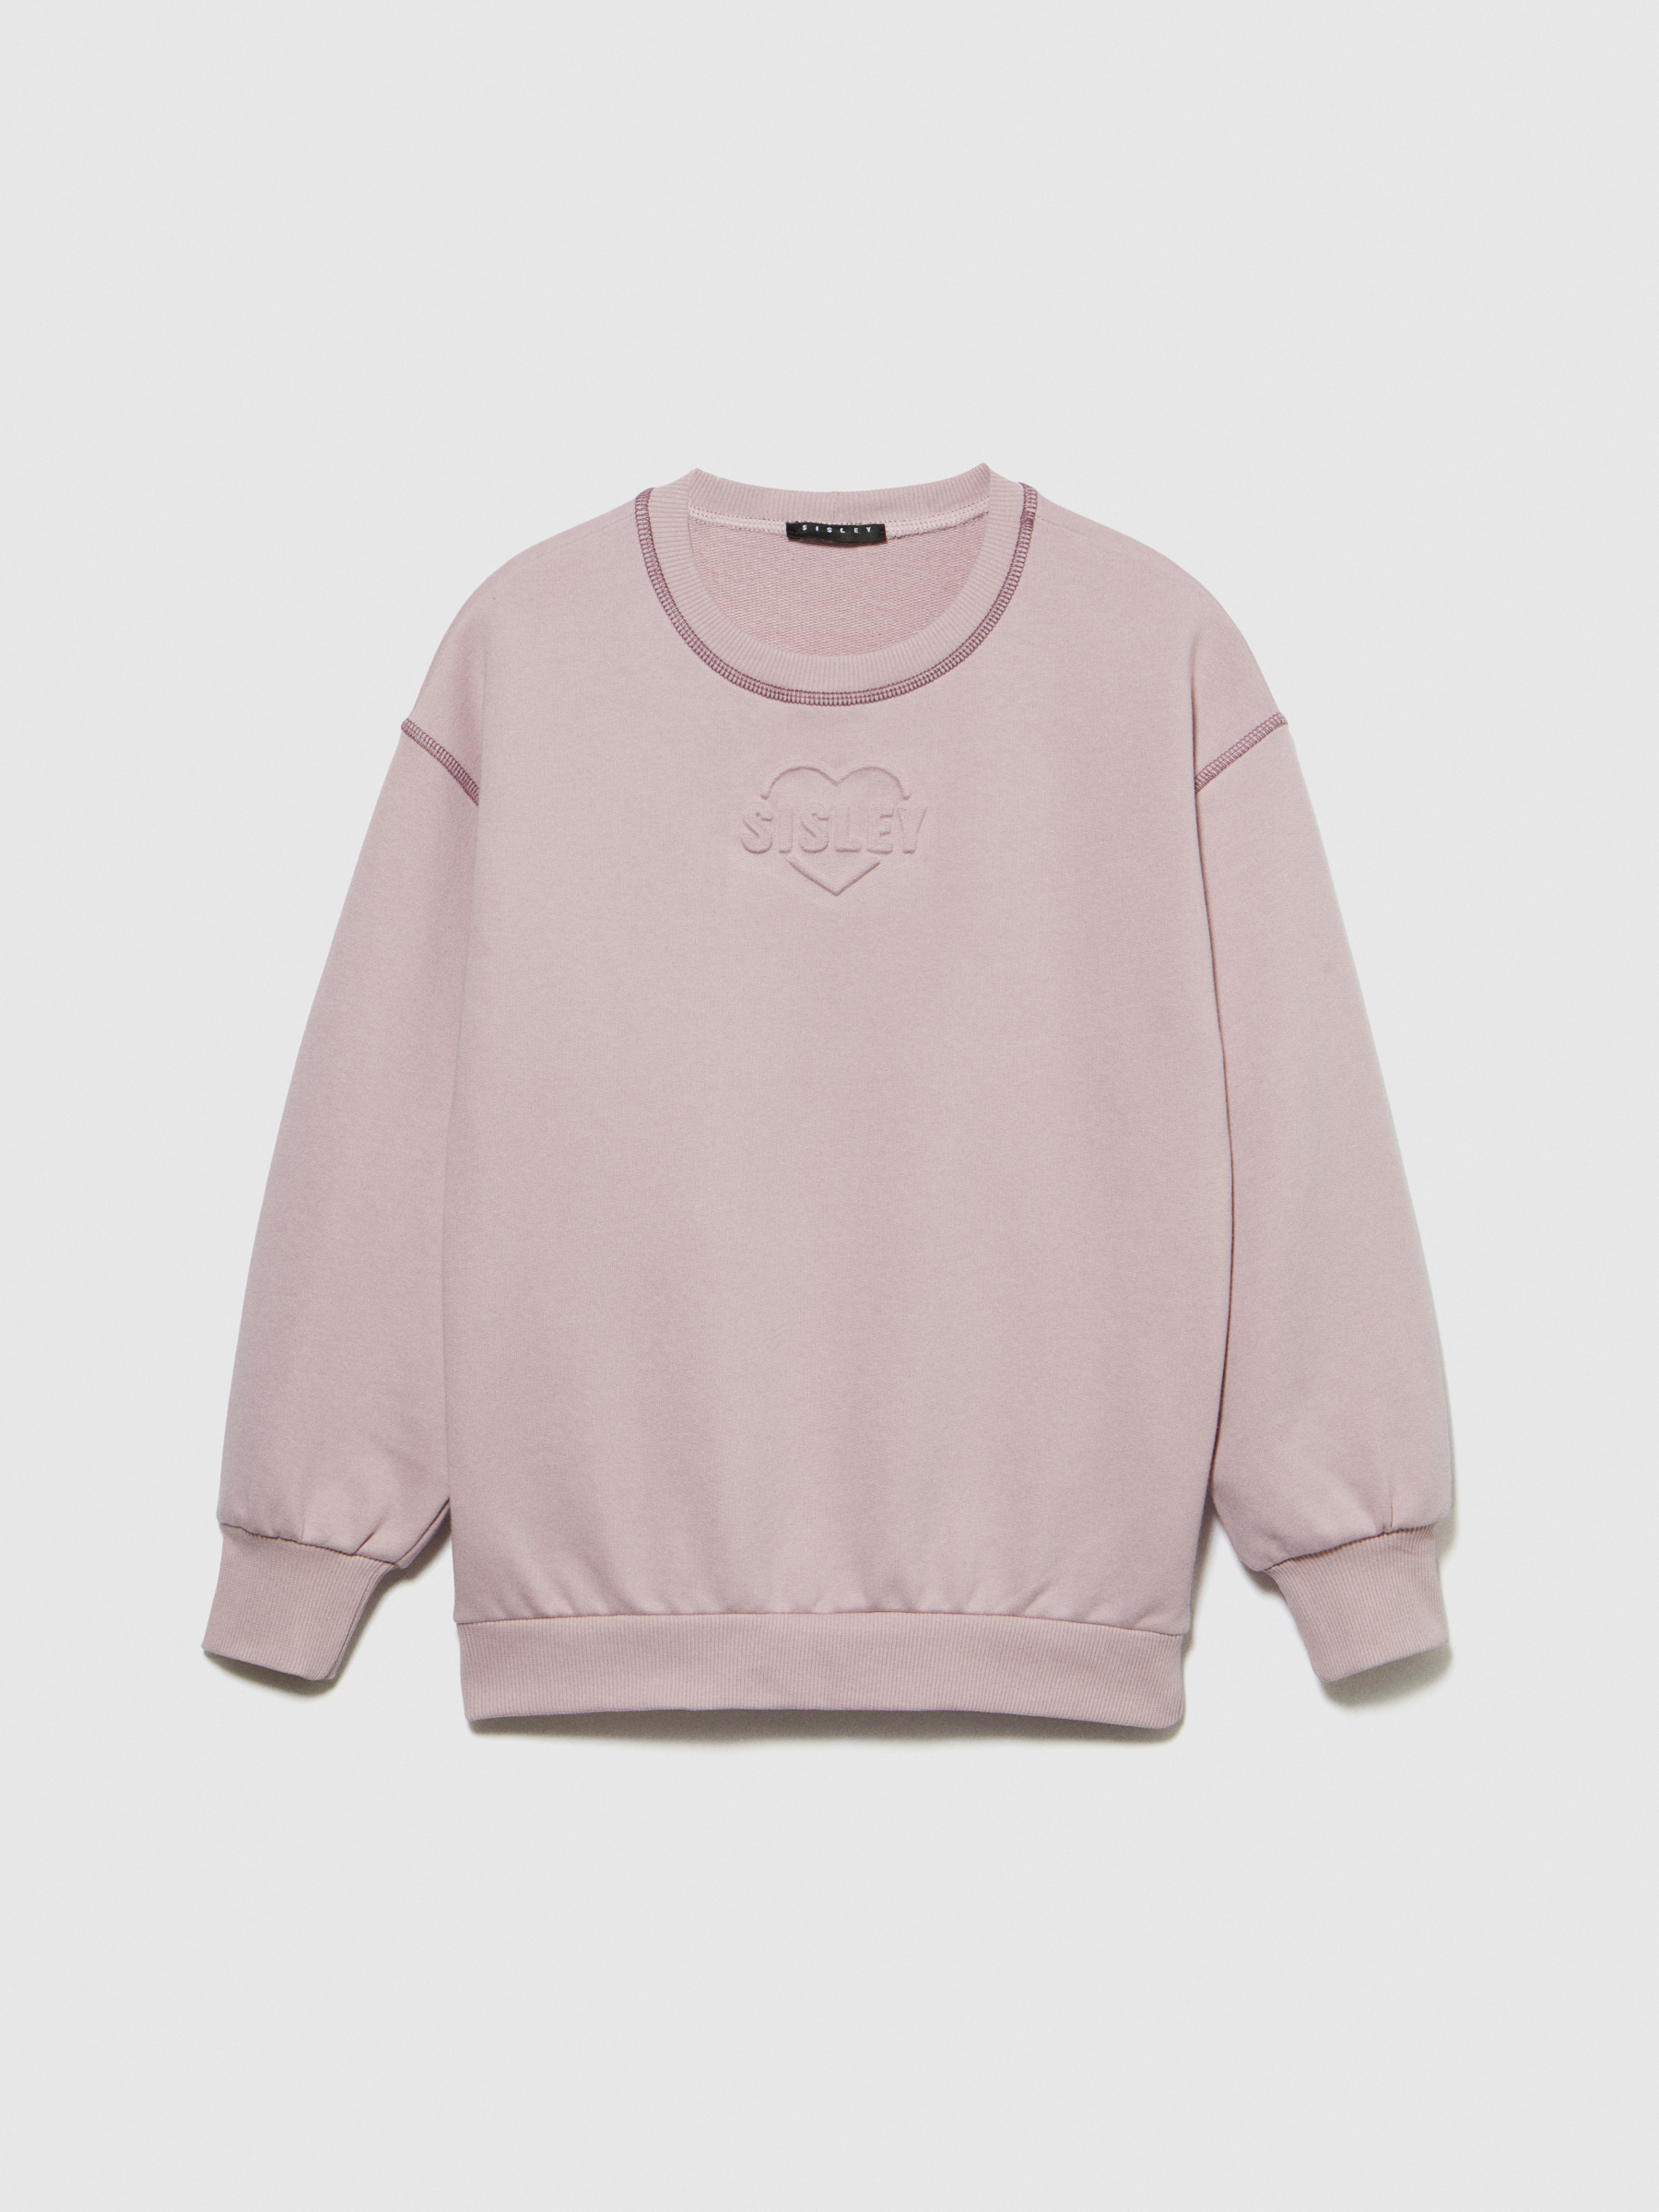 Sisley Young - Sweatshirt With Embossed Print, Woman, Pastel Pink, Size: KL